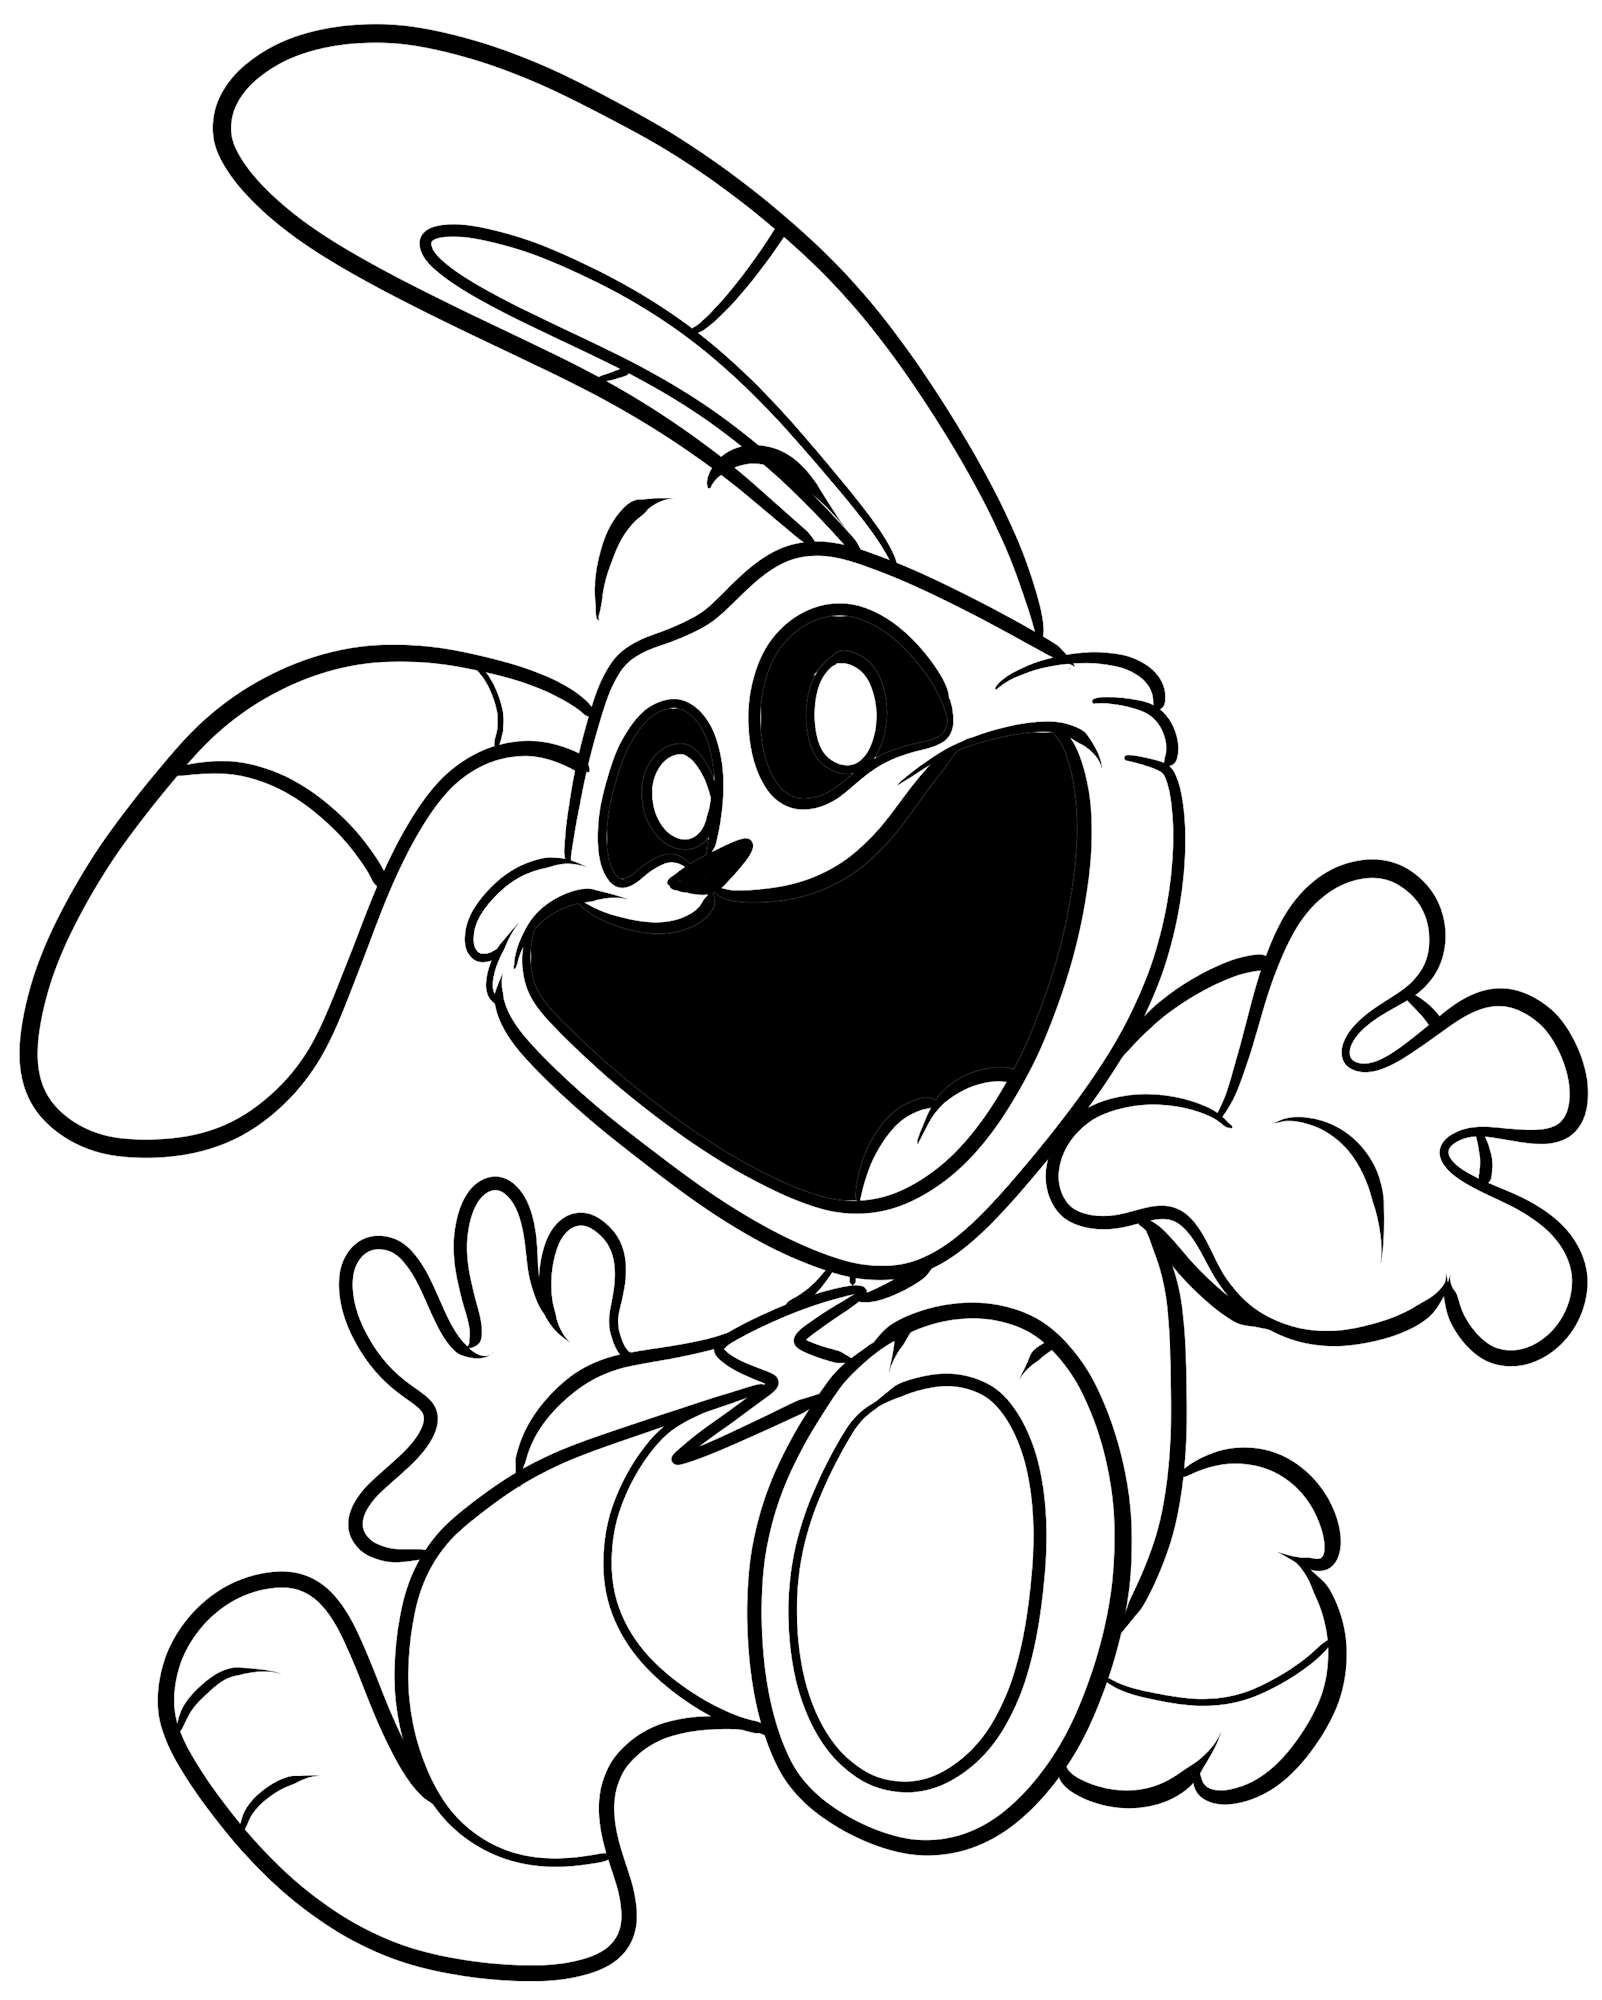 Página de Hoppy Hopscotch de Smiling Critters para imprimir y colorear